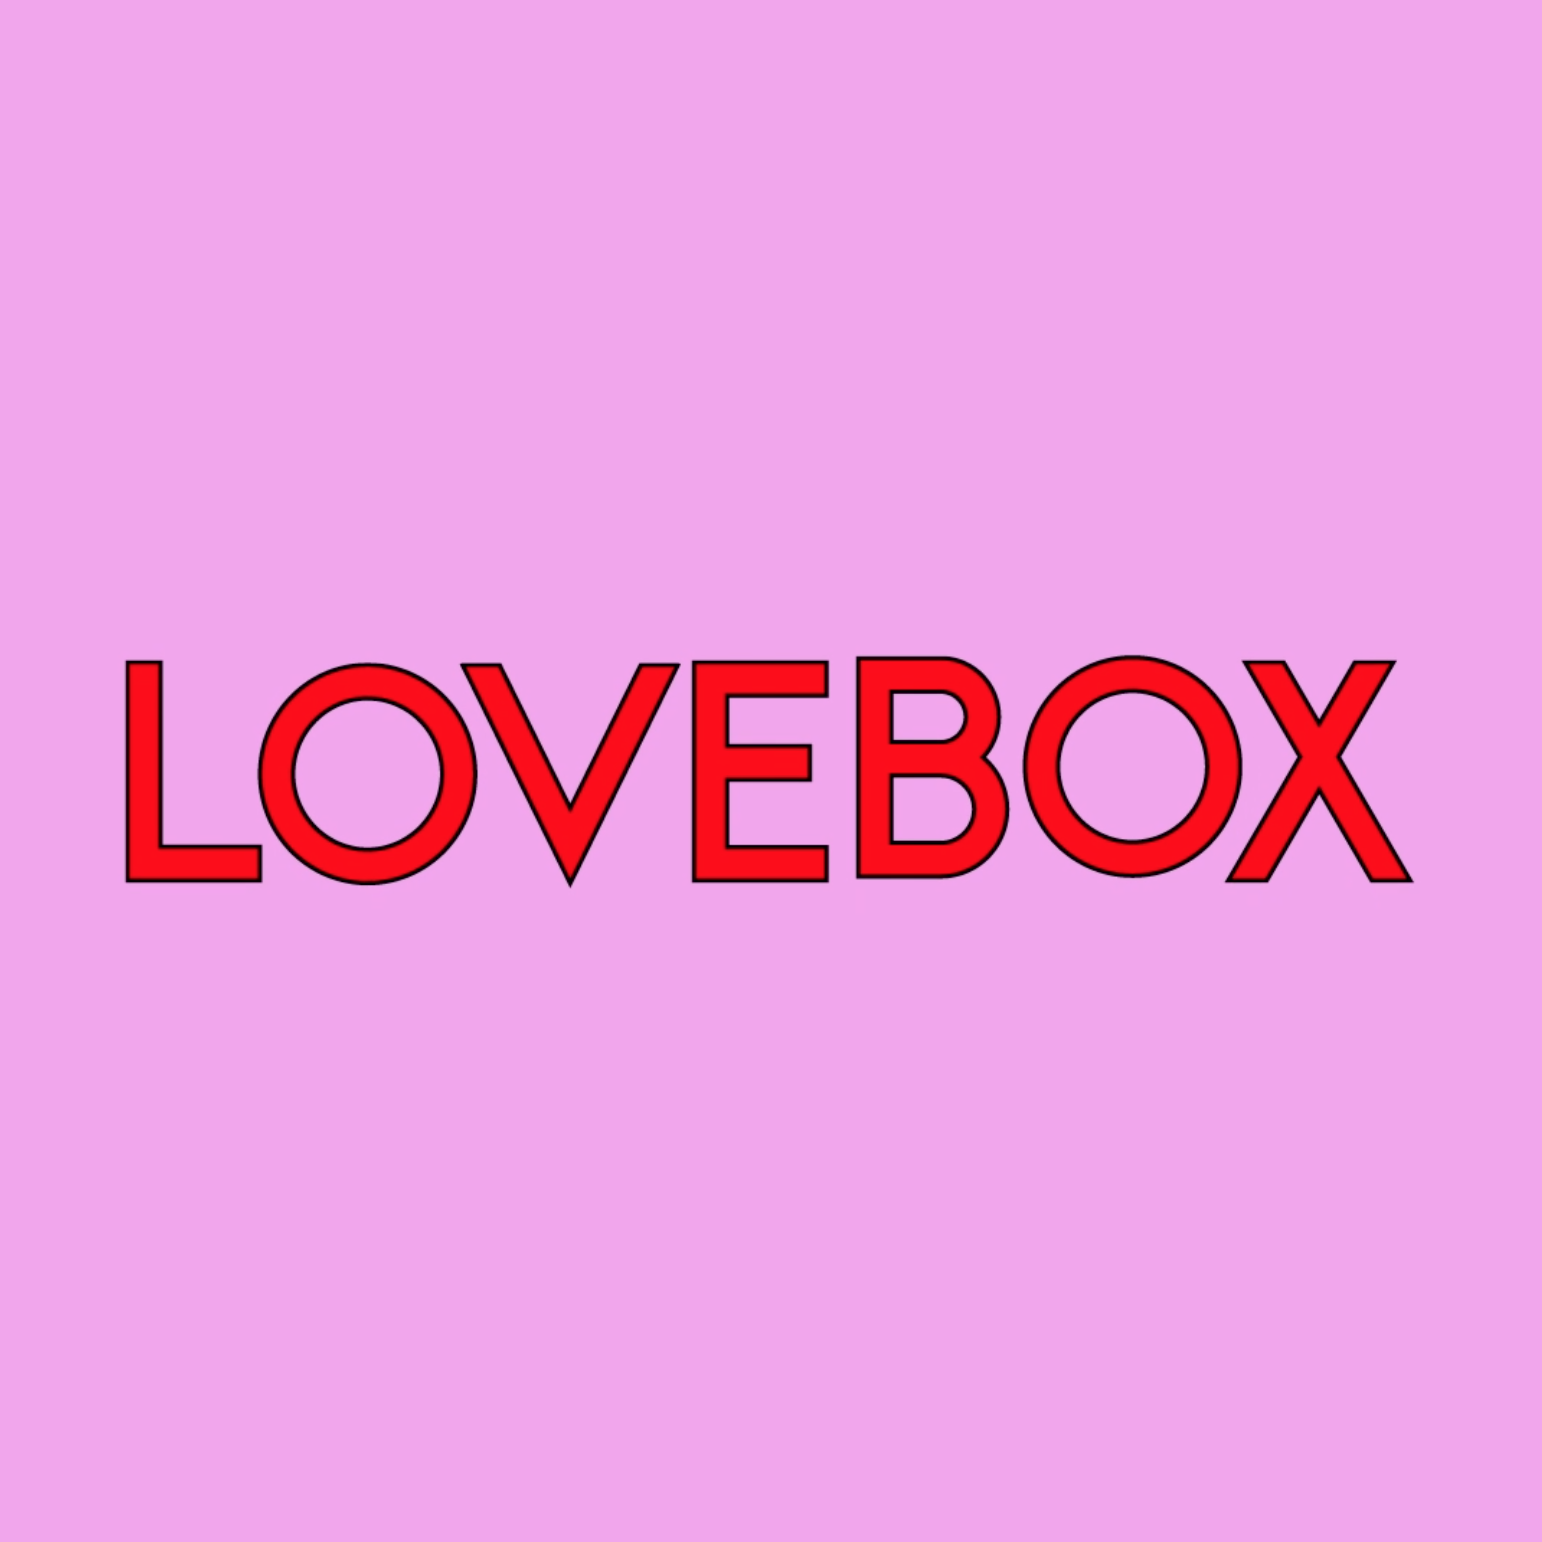 (c) Loveboxfestival.com